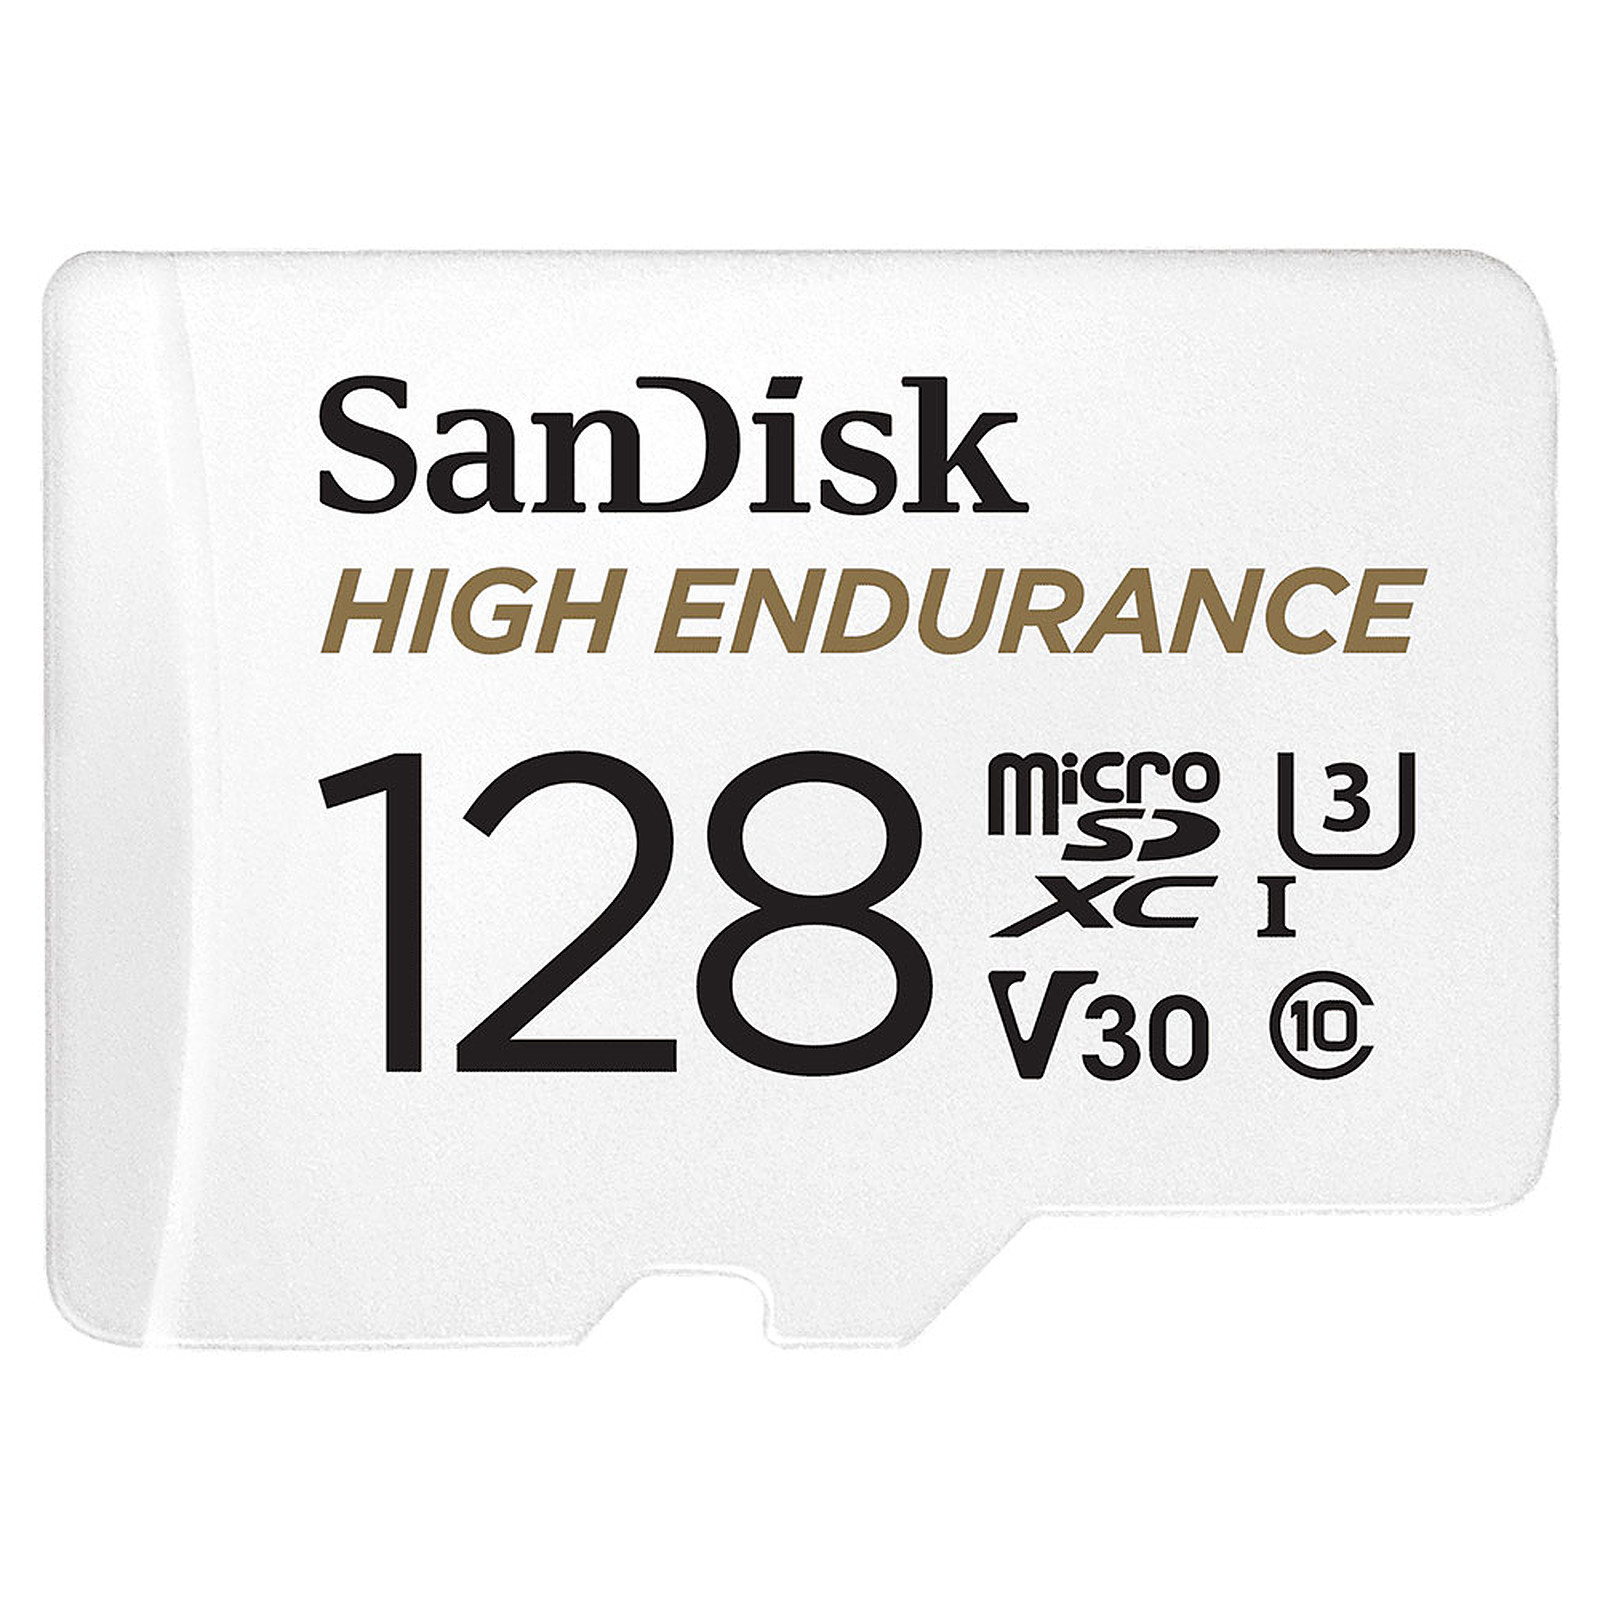 SanDisk High Endurance microSDXC UHS-I U3 V30 128 Go + Adaptateur SD - Carte memoire Sandisk